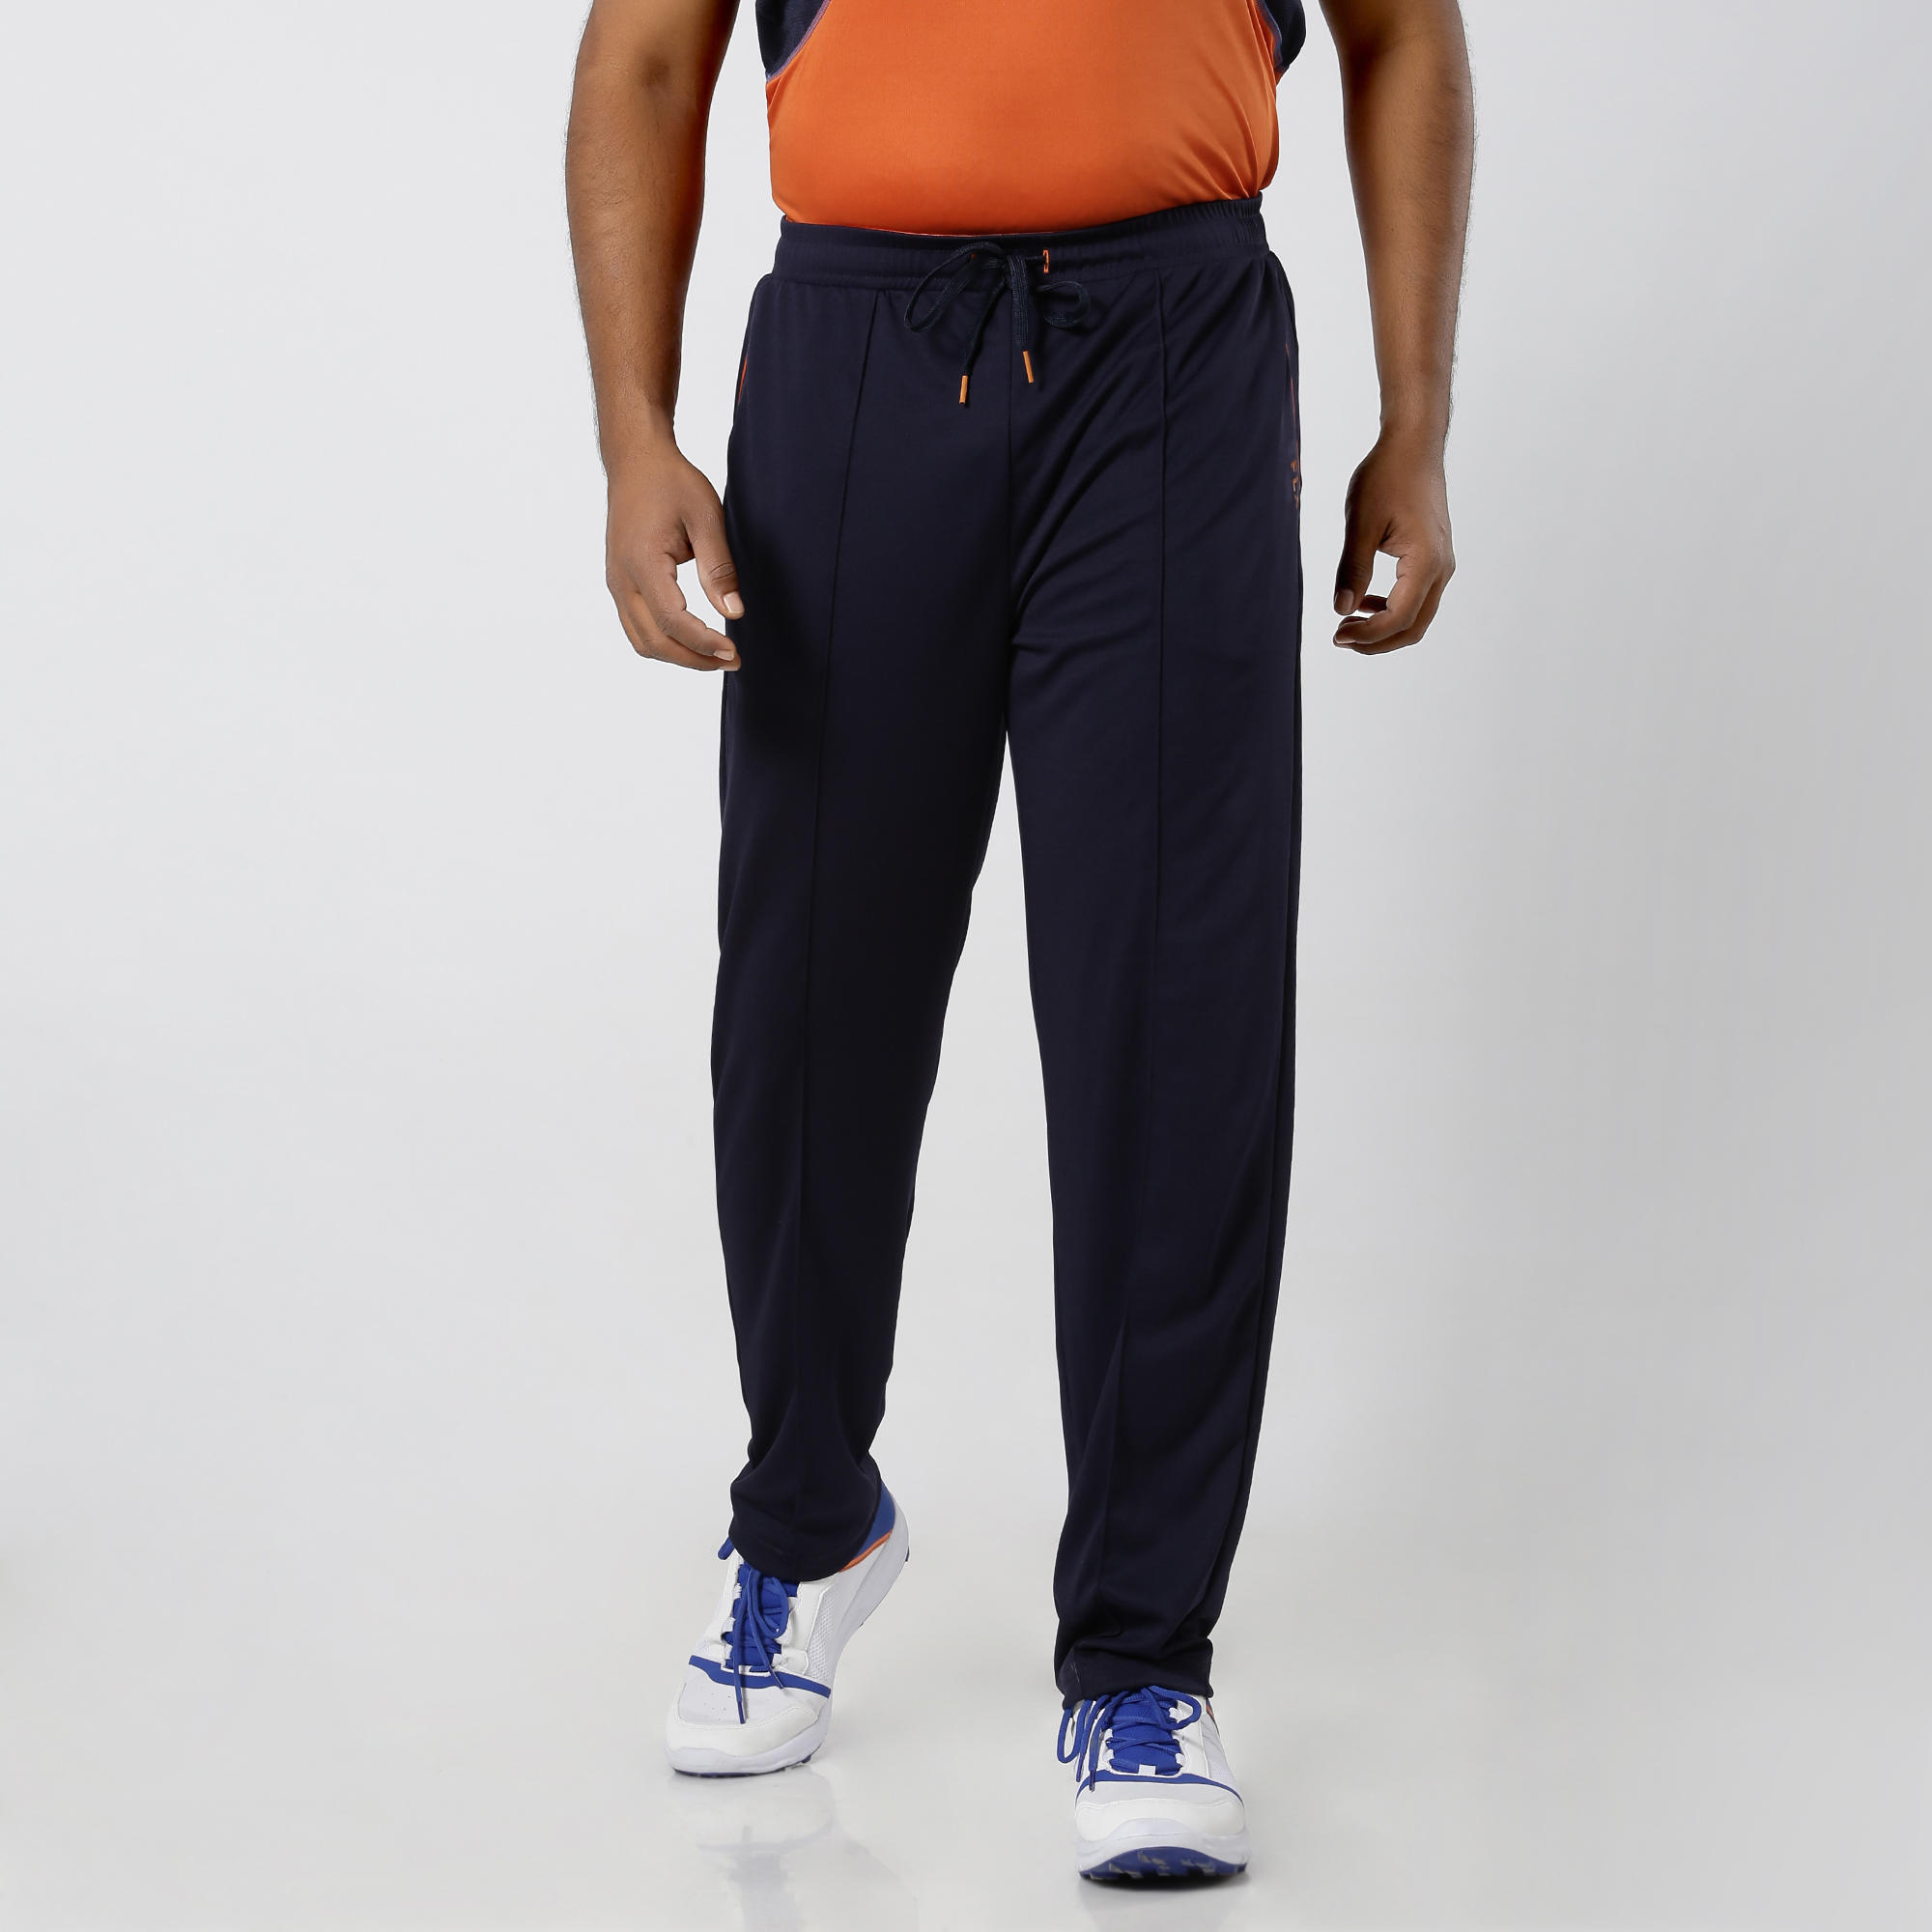 Buy MenS Recycled Polyester SlimFit Gym Track Pants  Black Online   Decathlon